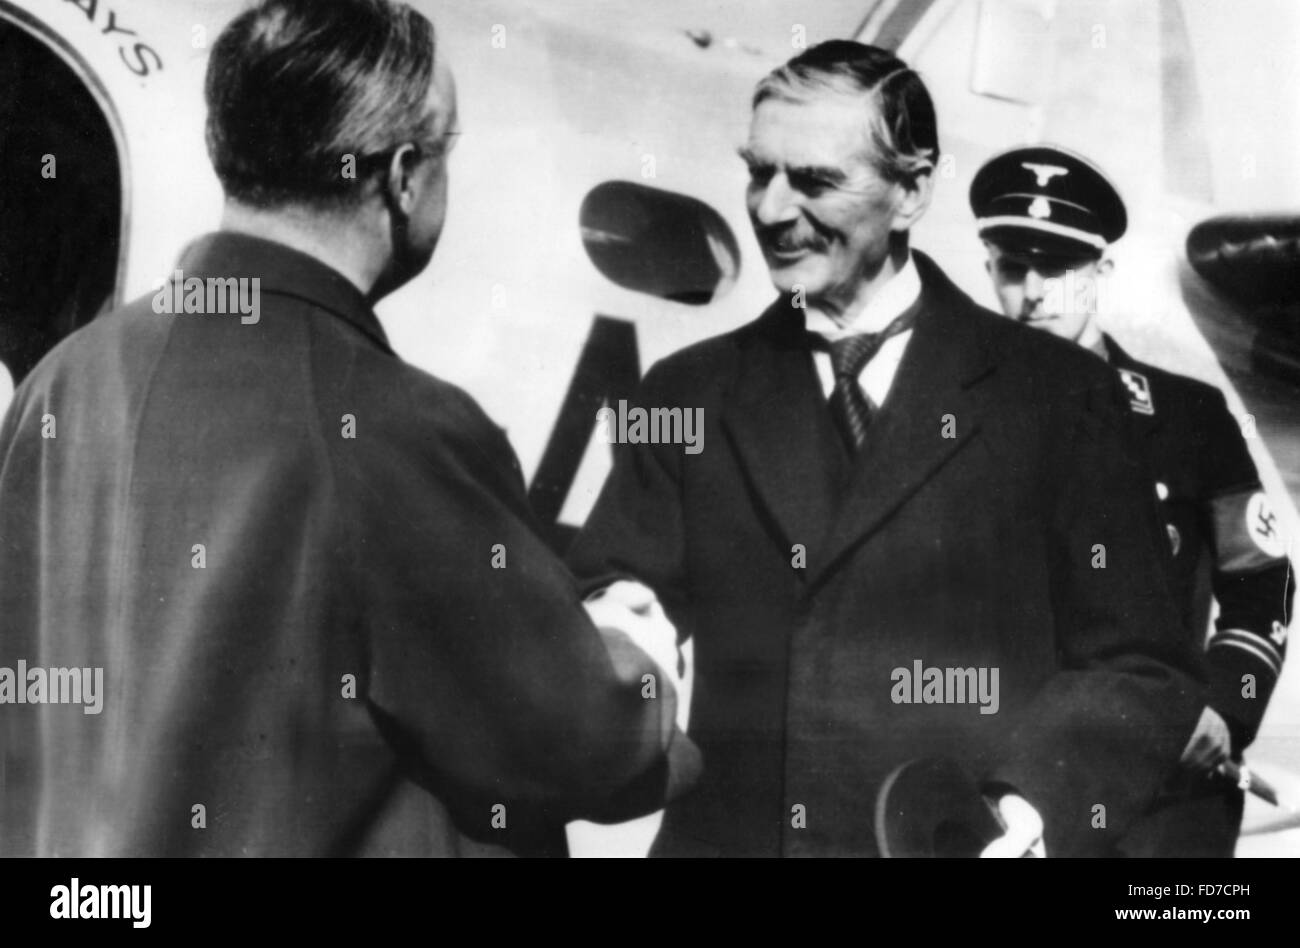 Chamberlain says goodbye to Ribbentrop, Cologne Airport 1938 Stock Photo